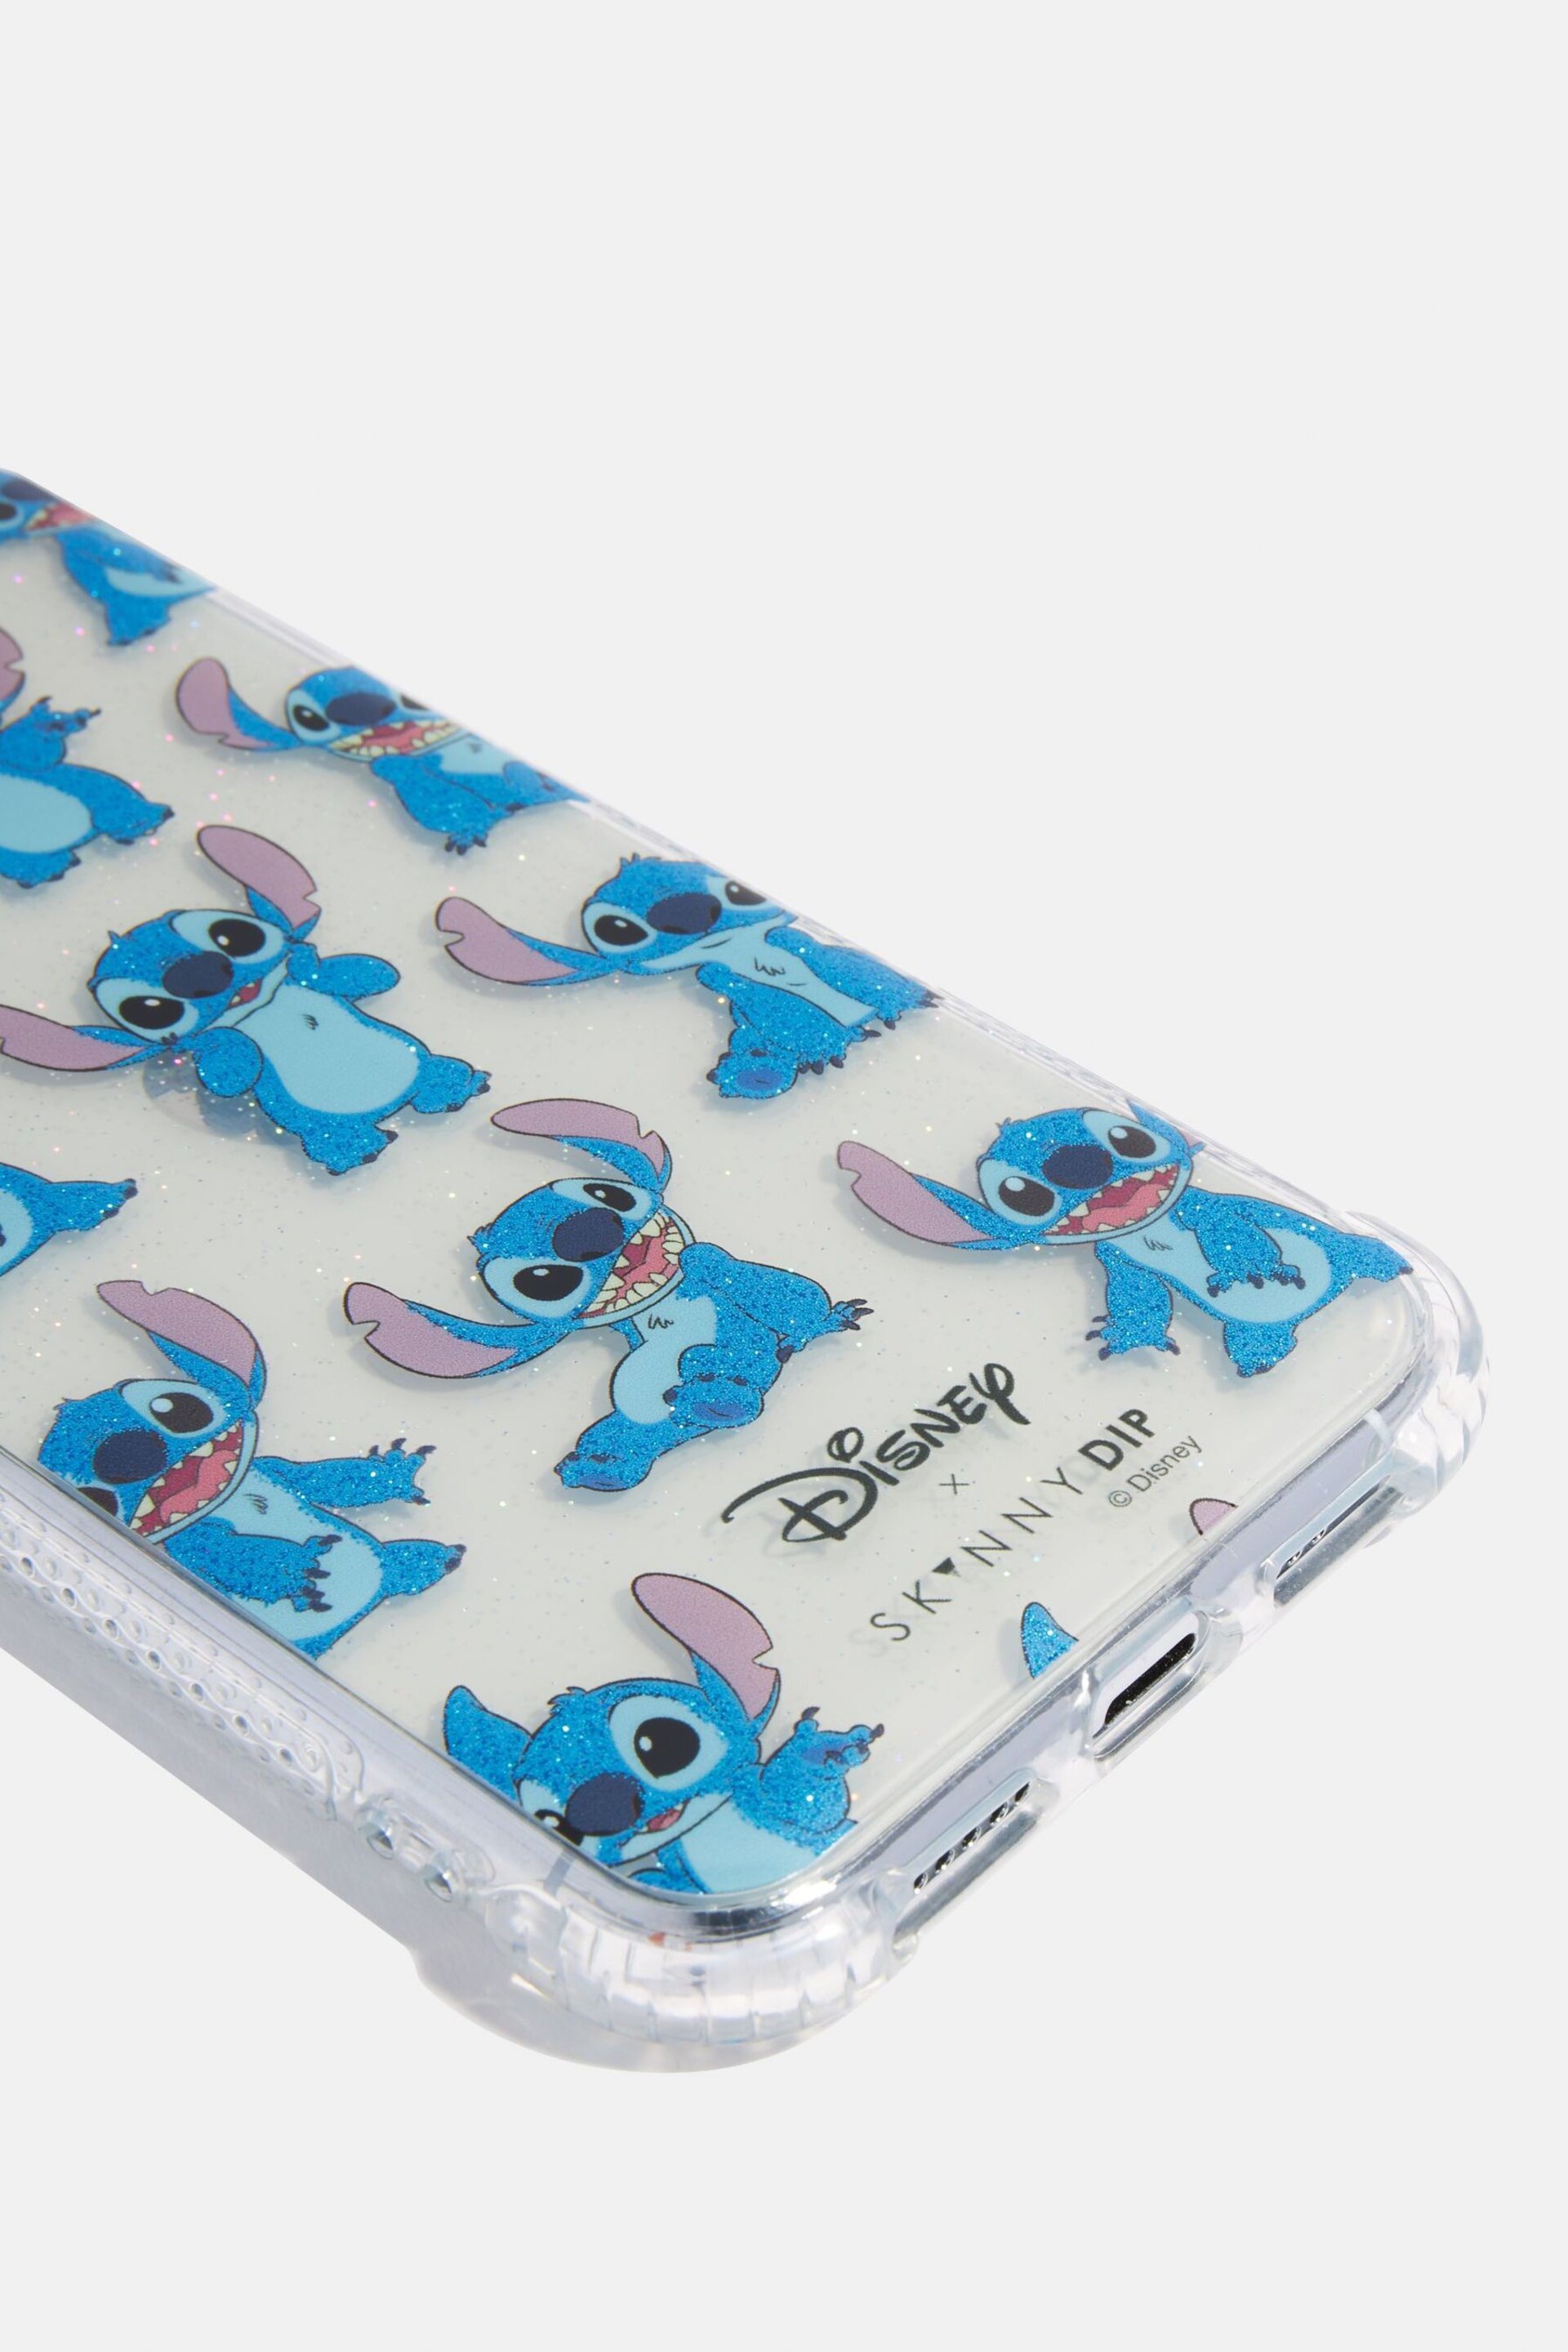 Skinnydip Stitch London x Disney 13 Pro Max Case - Image 4 of 5